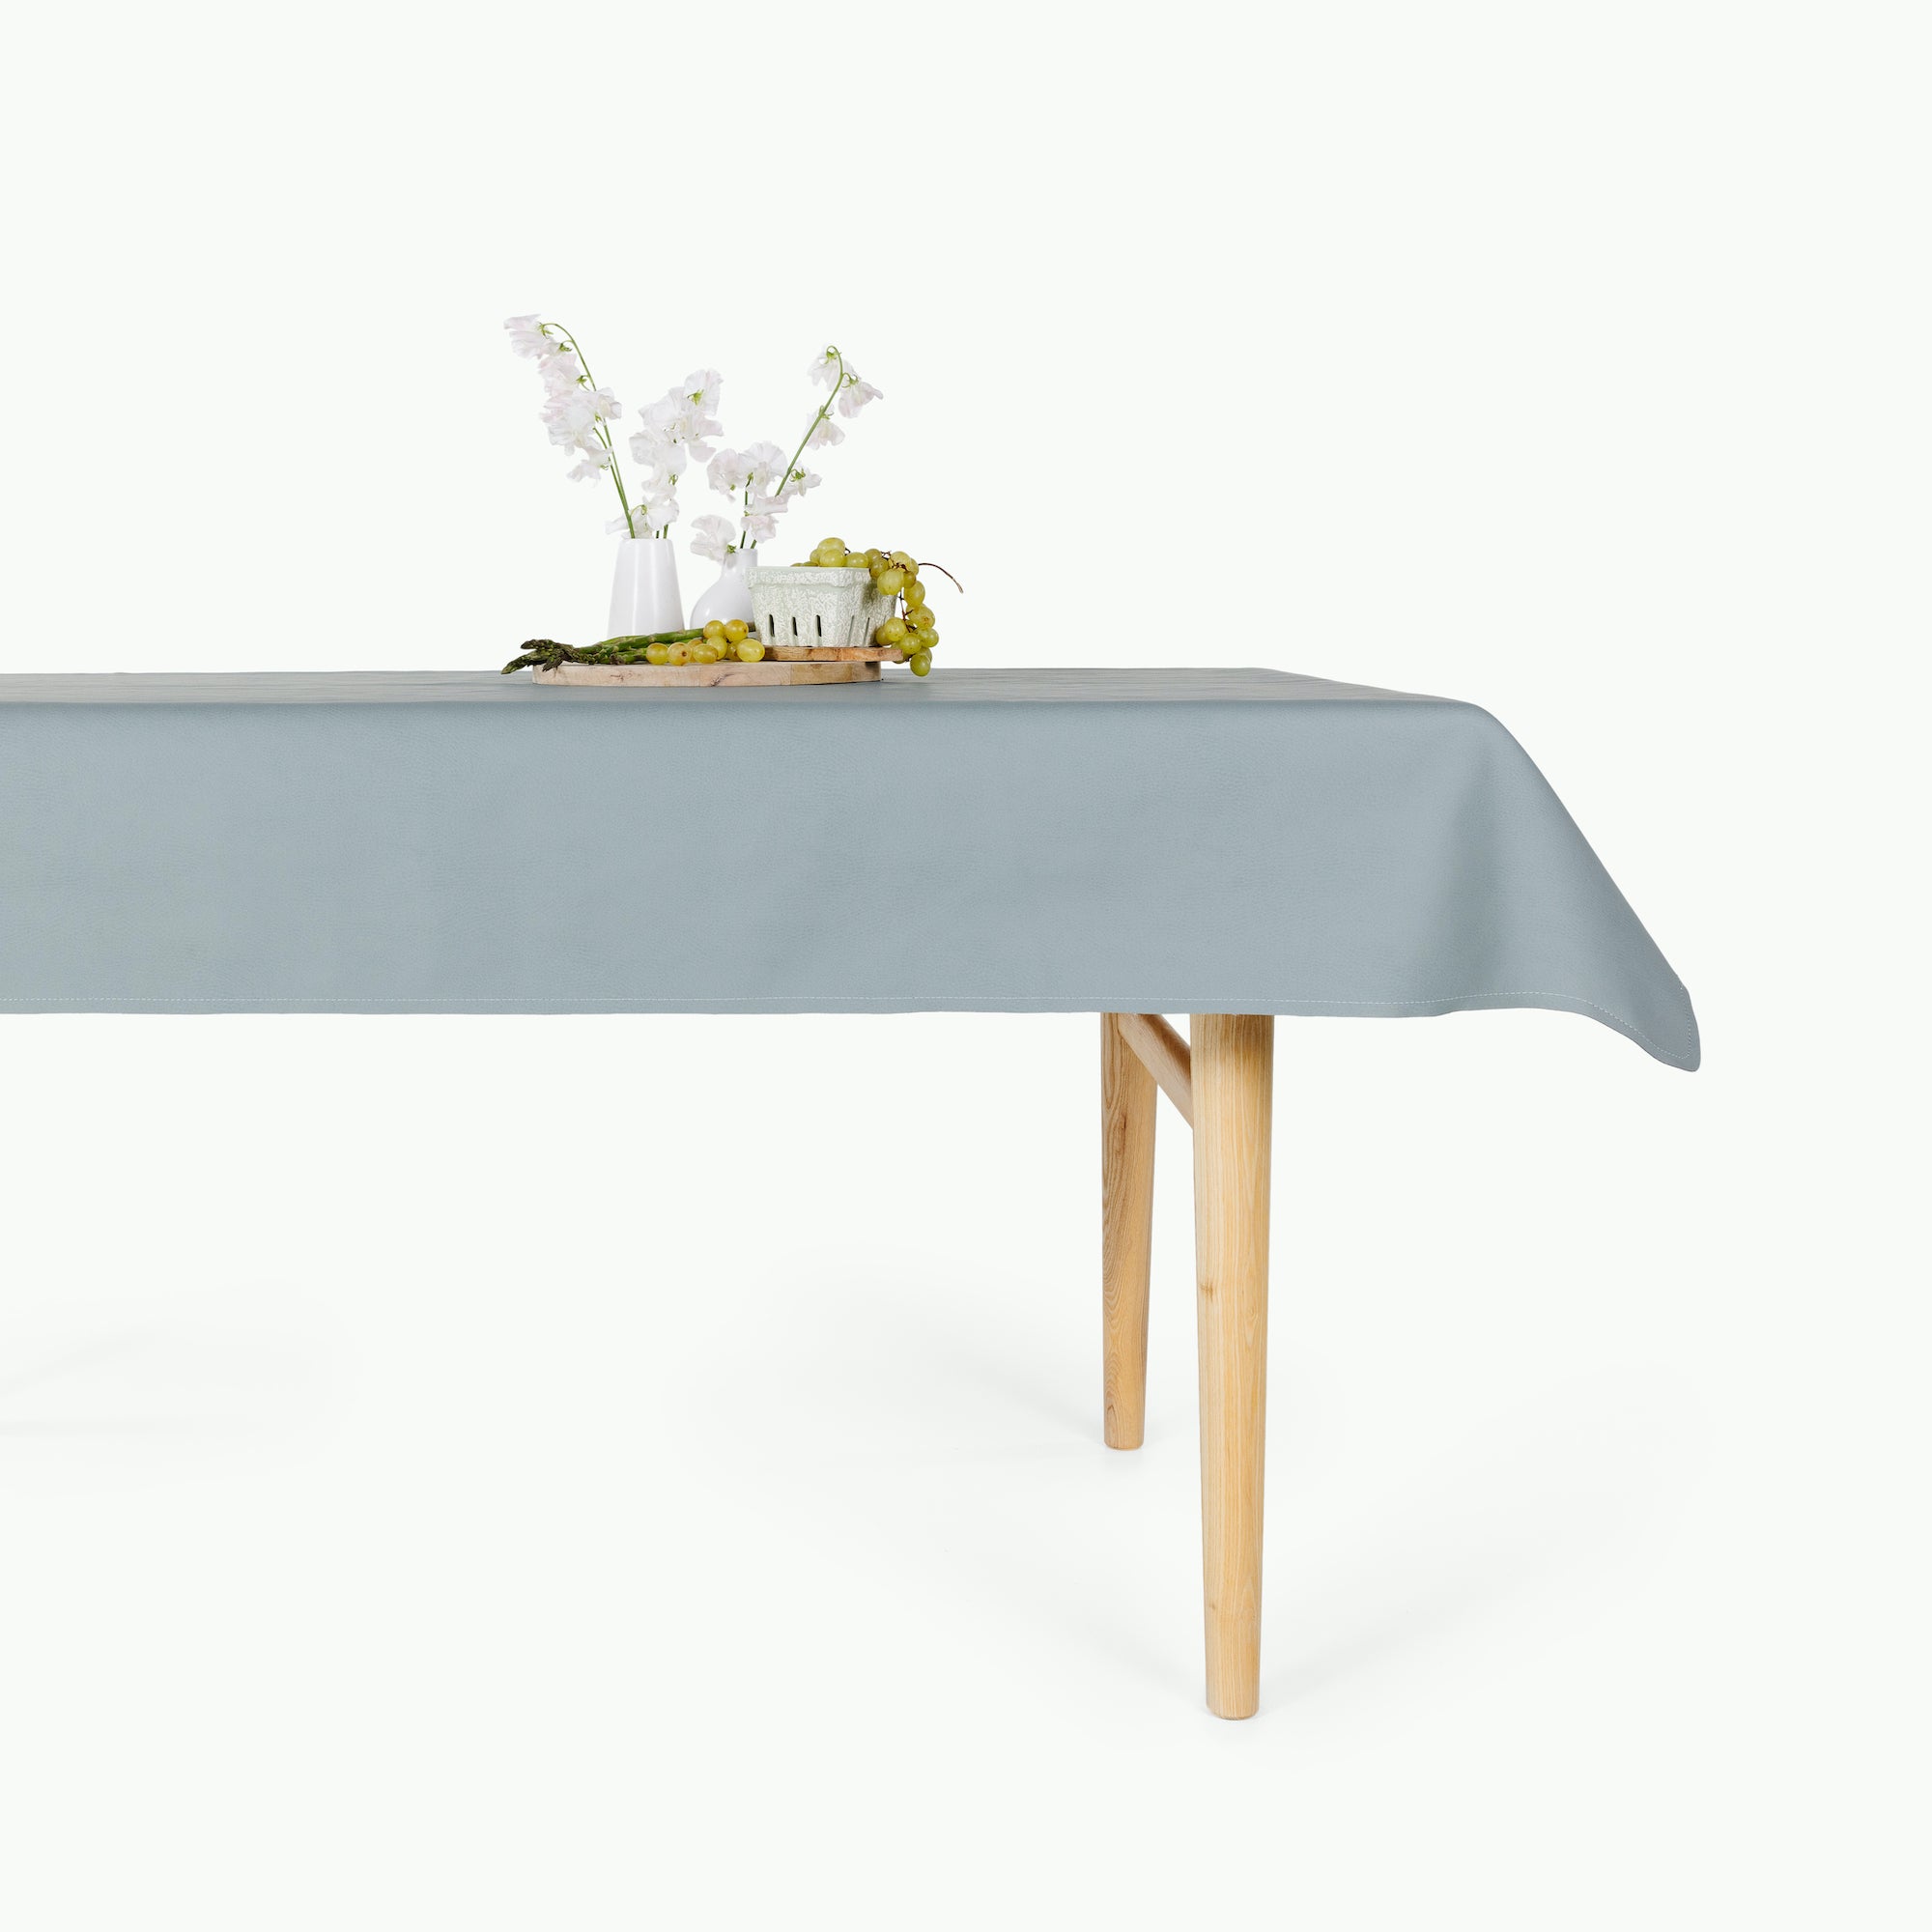 Amalfi / 8 Foot@amalfi tablecloth on table 